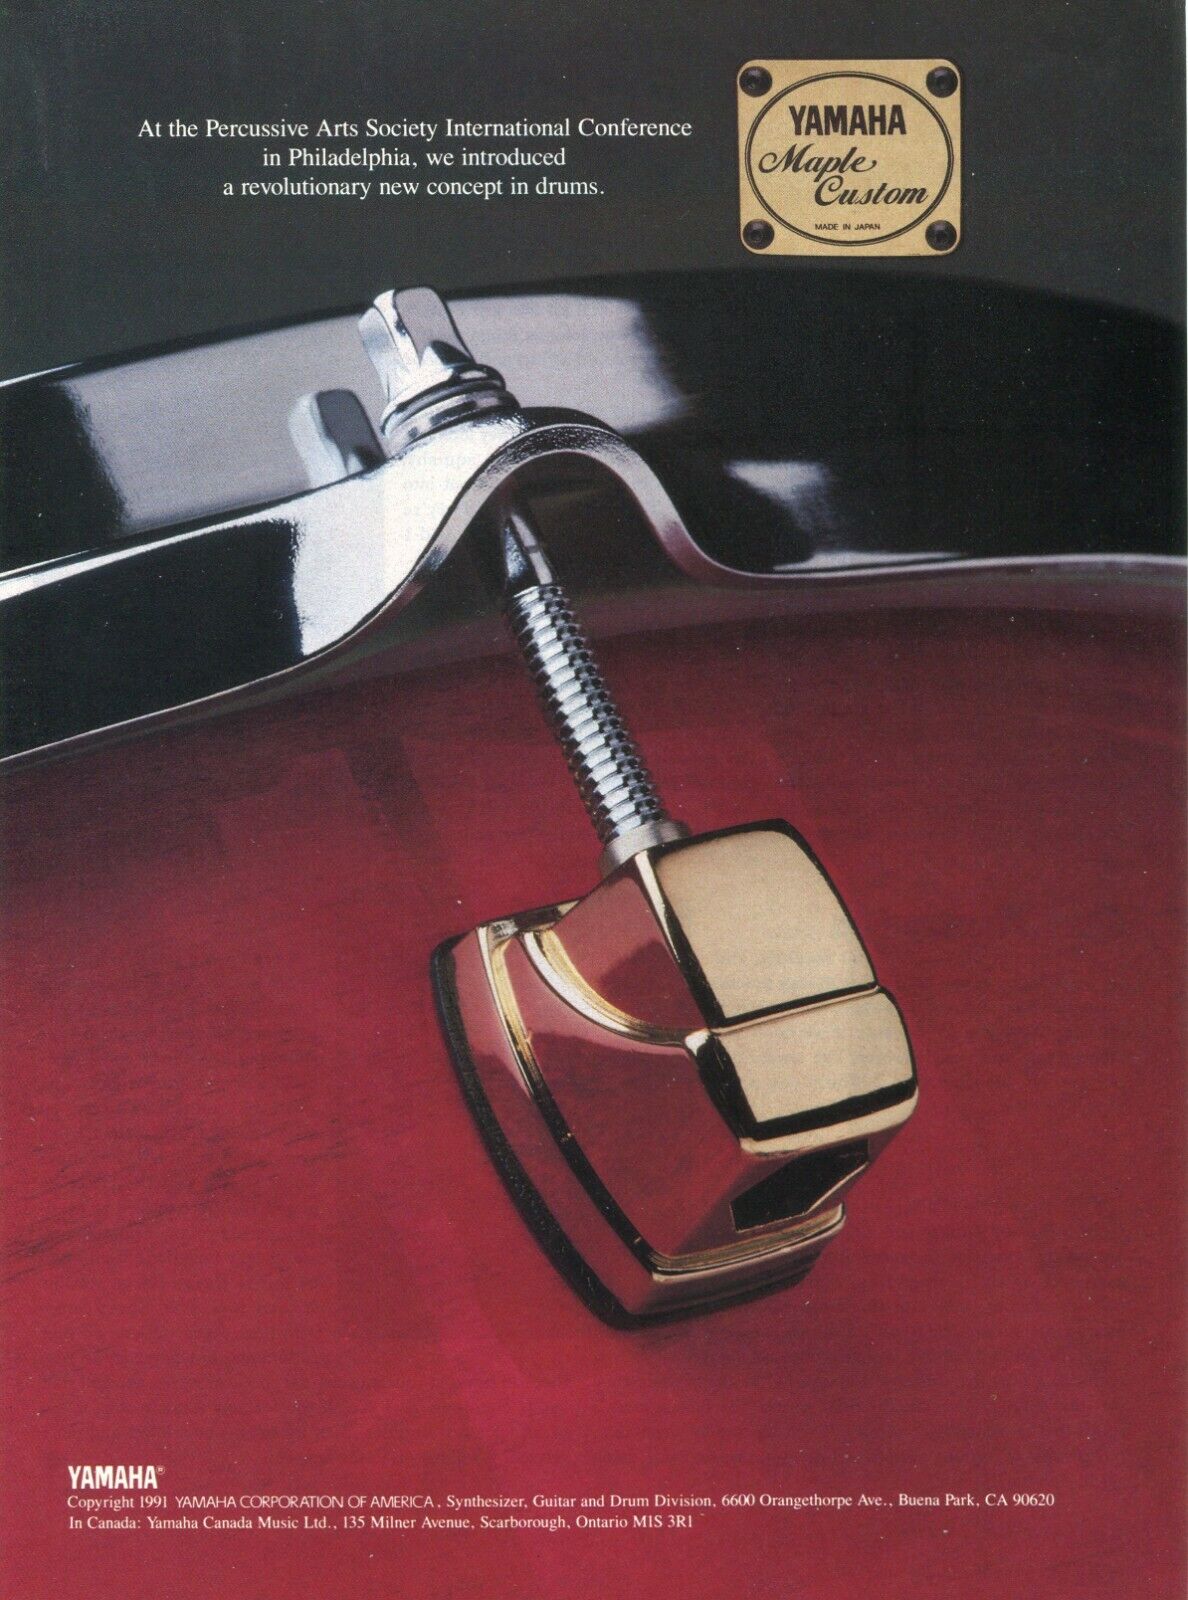 1991 Print Ad of Yamaha Maple Custom Drums